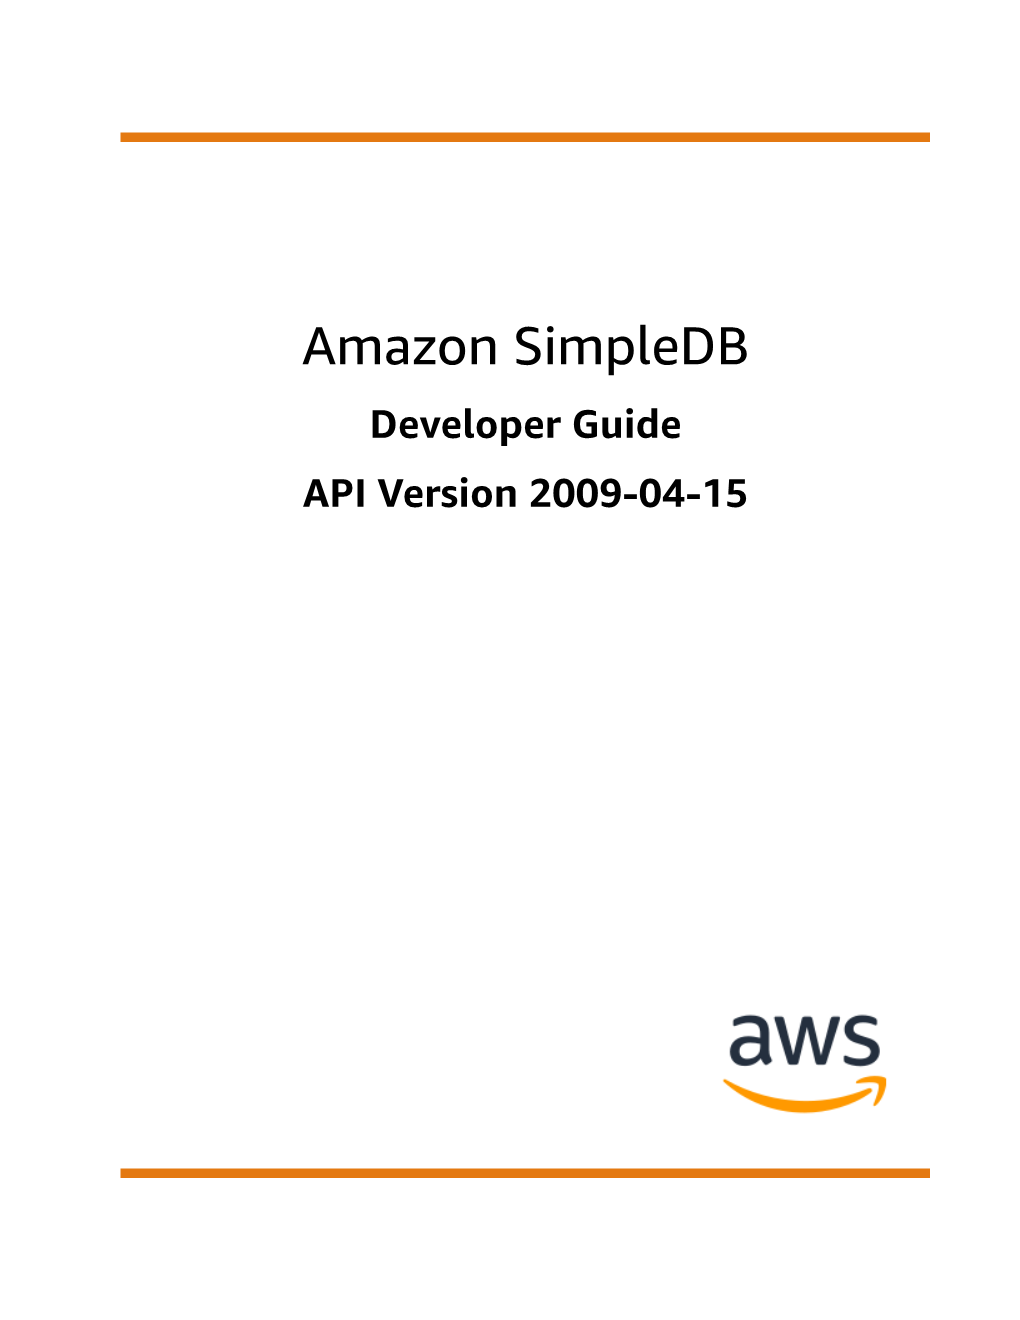 Amazon Simpledb Developer Guide API Version 2009-04-15 Amazon Simpledb Developer Guide